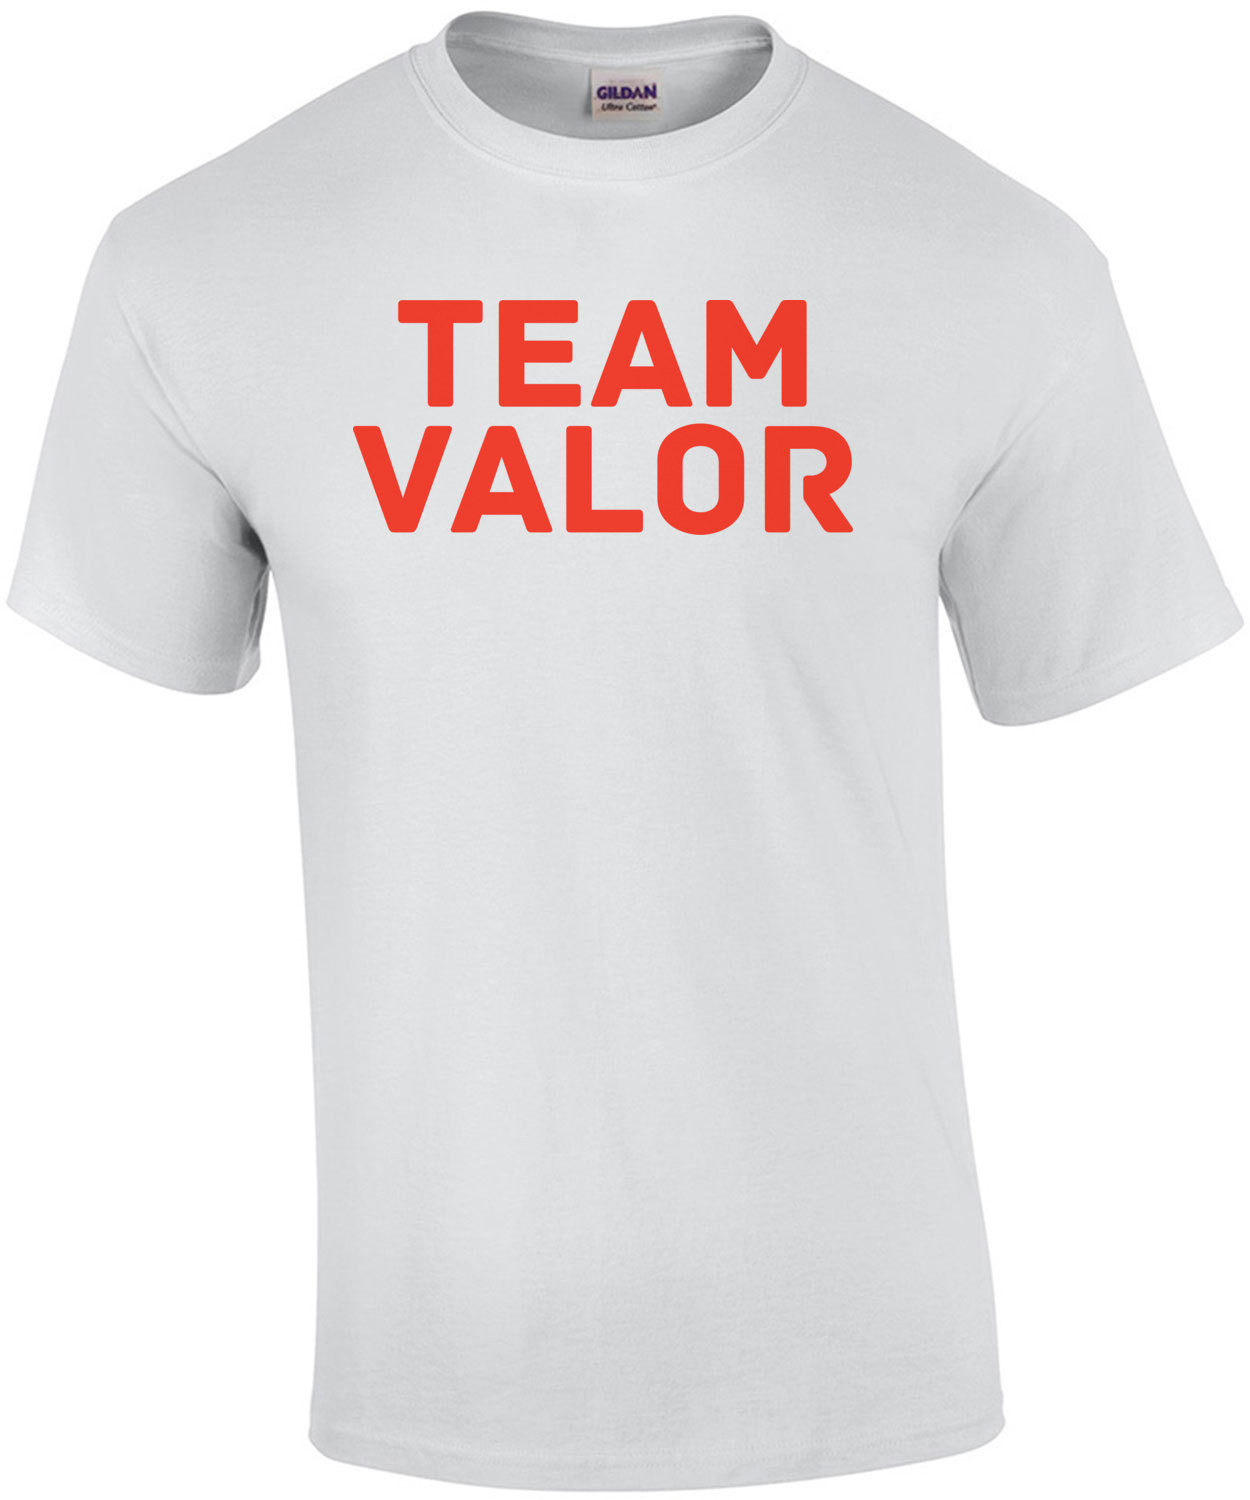 Pokemon Go Team Valor (Text Only) Shirt